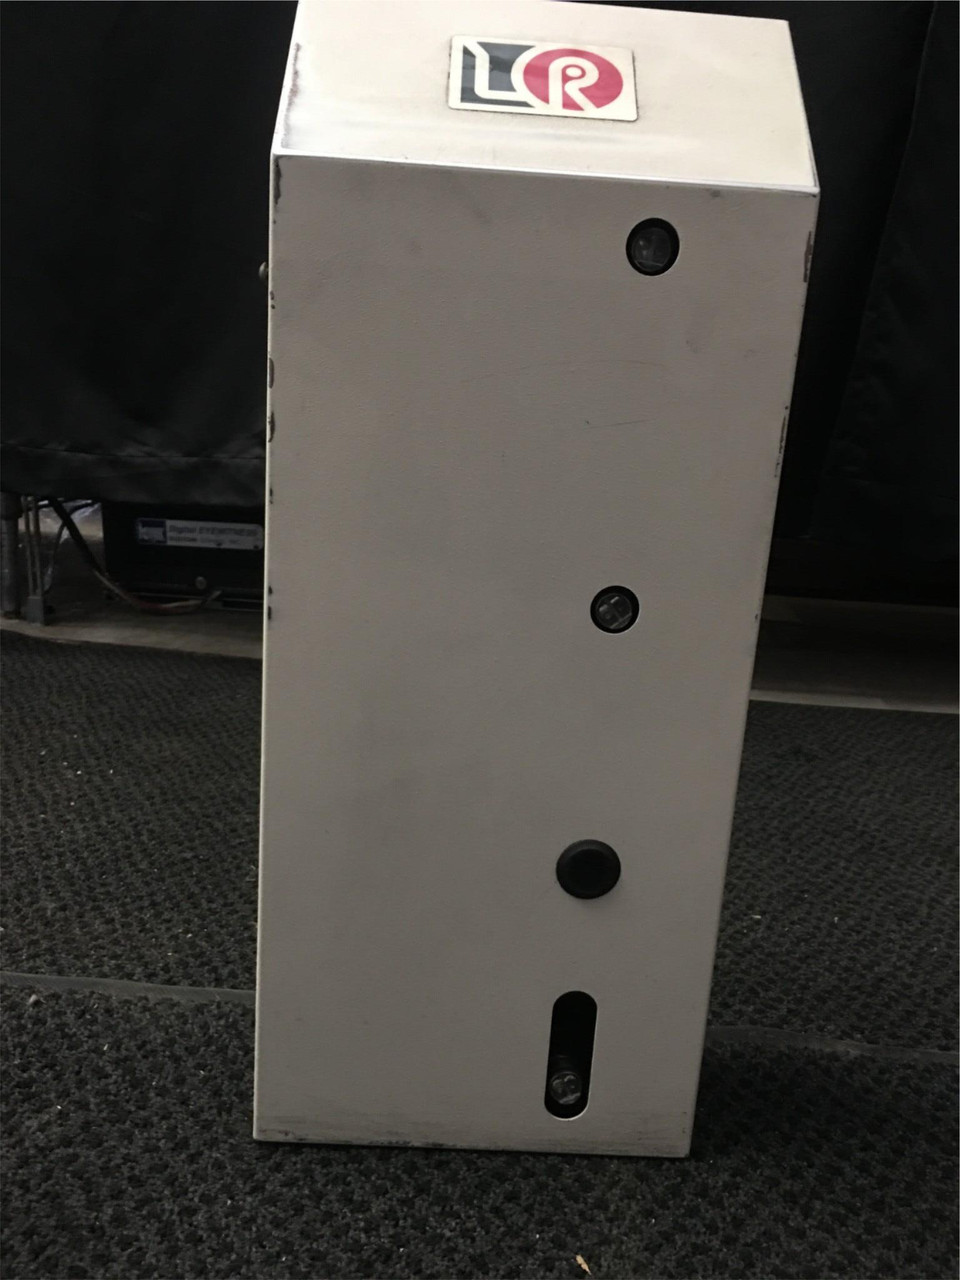 LaserMax Roll System Paper Sensor Tower Model 506065